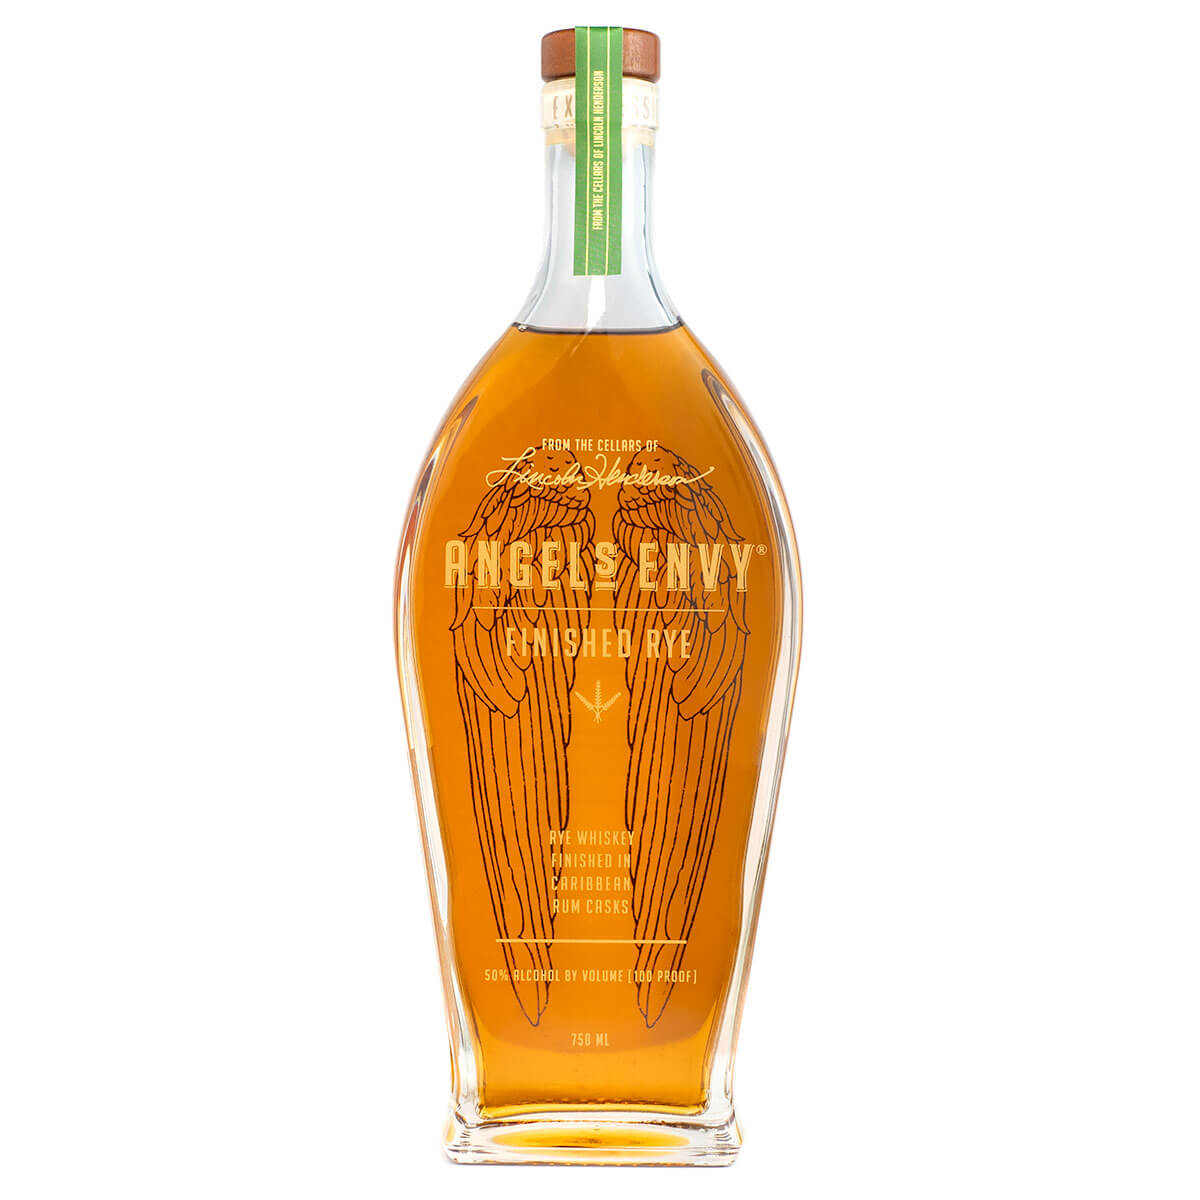 Angel's Envy Rye Finished in Rum Barrels bottle